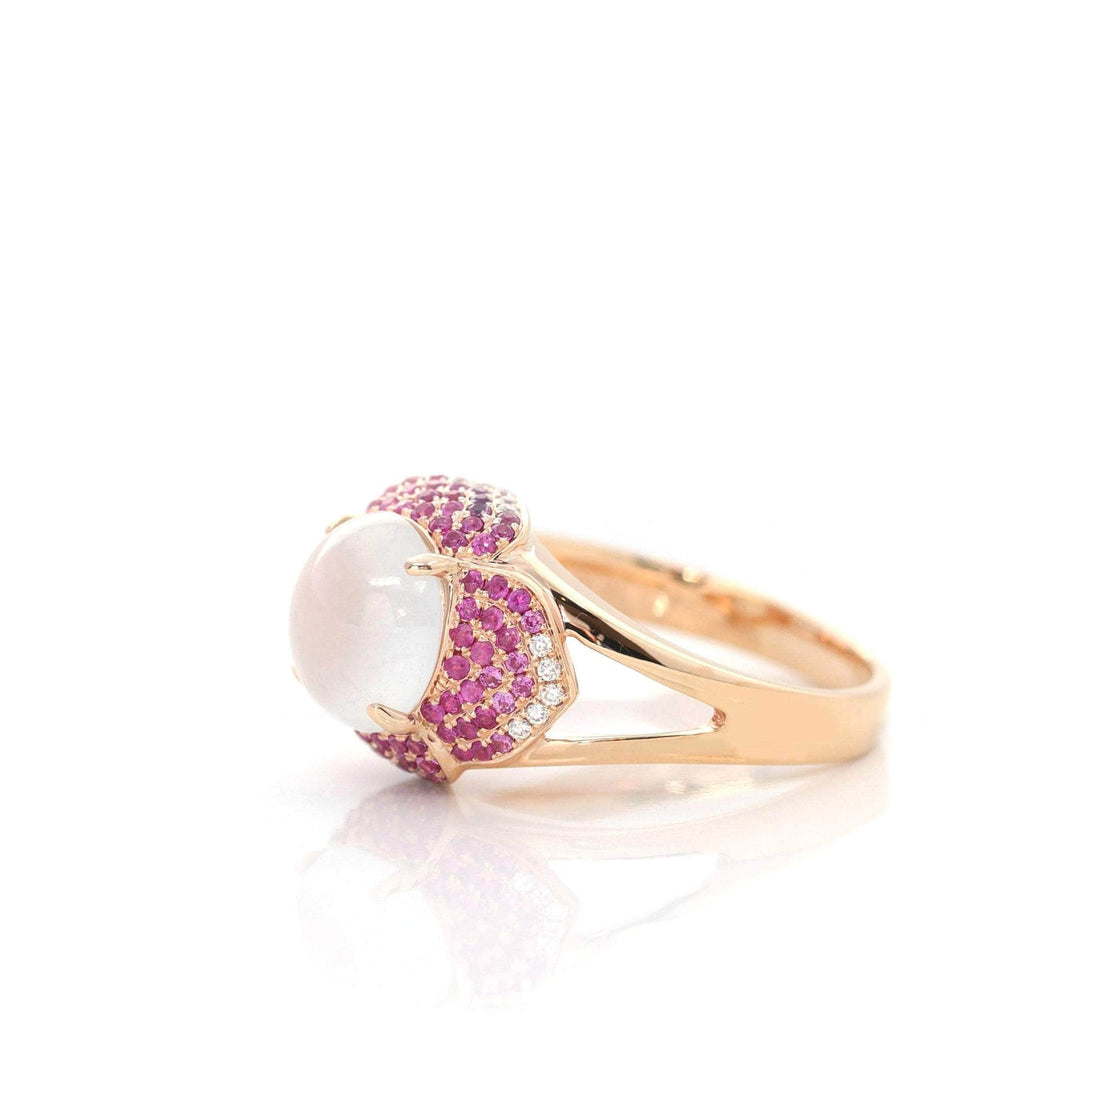 Baikalla Jewelry Jadeite Engagement Ring 18k Rose Gold Natural Ice Jadeite Engagement Ring With Diamonds and Ruby